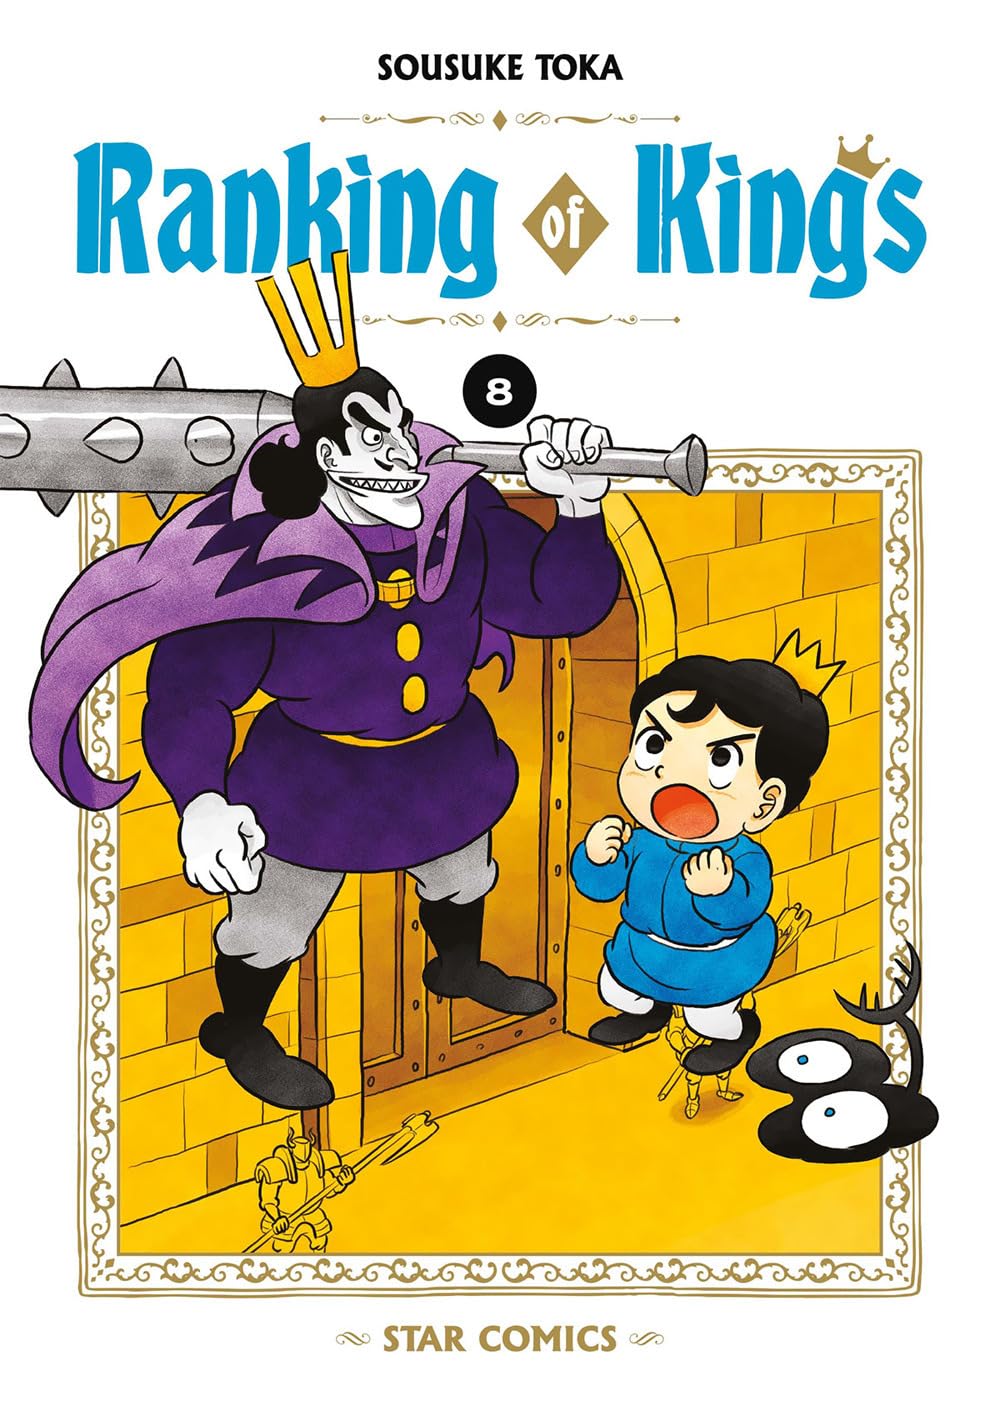 Immagine di Ranking of Kings 8 – Wonder 139 – Edizioni Star Comics – Italiano